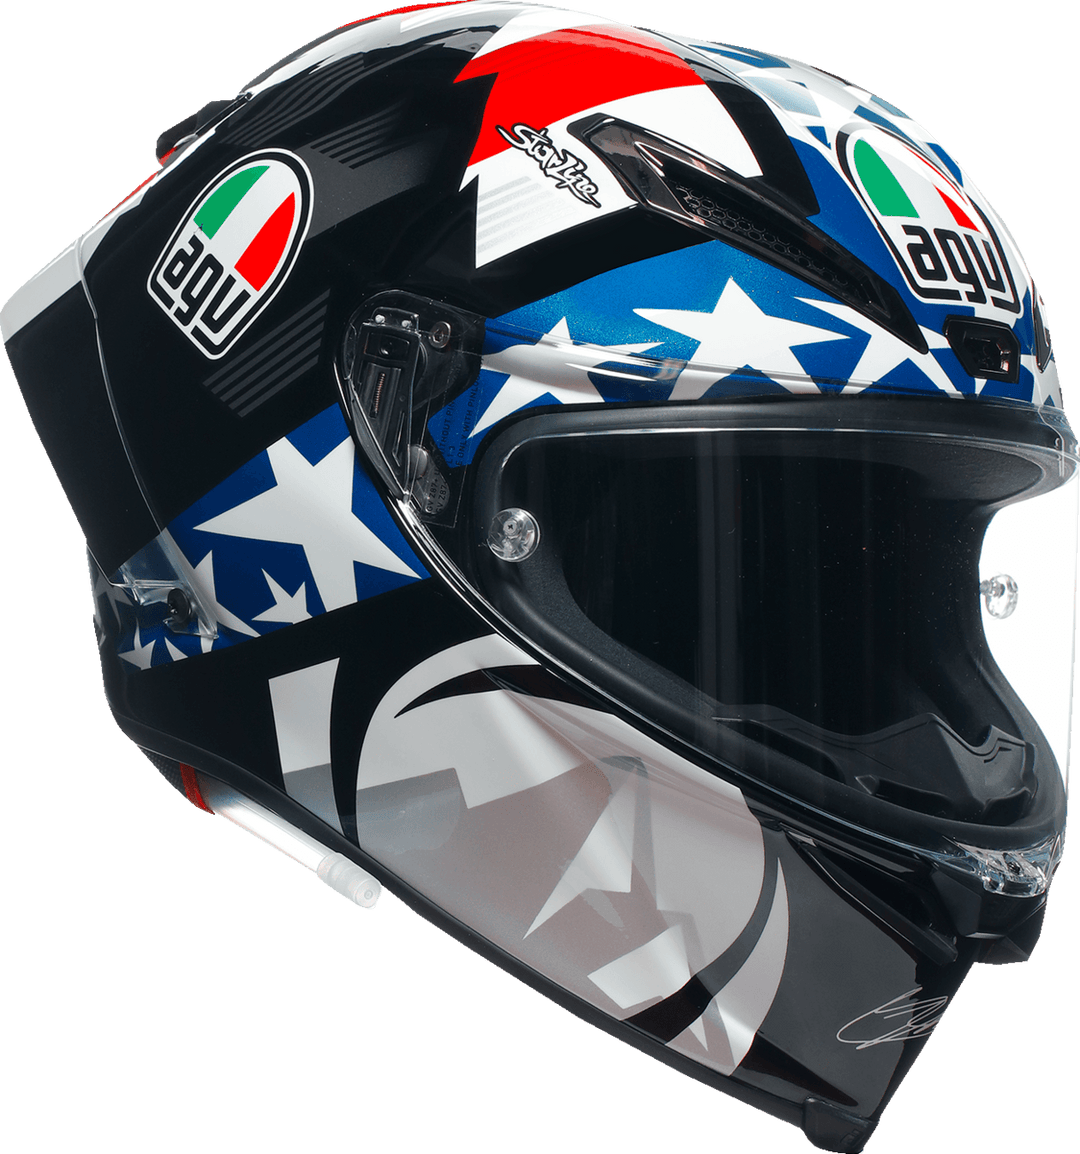 AGV Pista GP RR Helmet - MIR Americas 2021 Limited Edition - Motor Psycho Sport